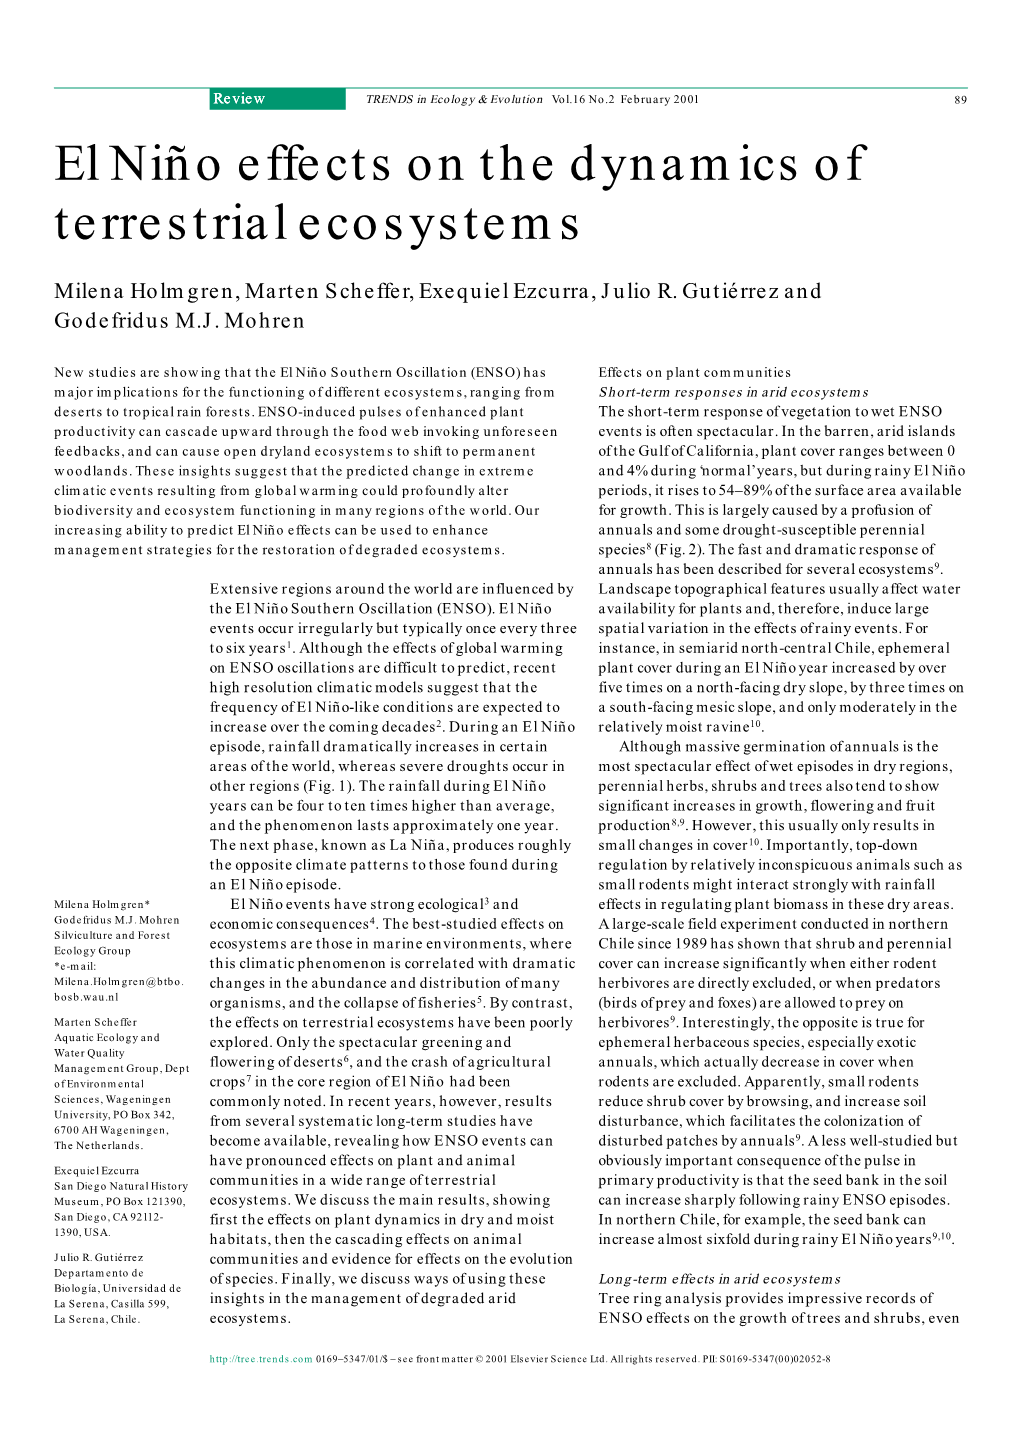 El Niño Effects on the Dynamics of Terrestrial Ecosystems